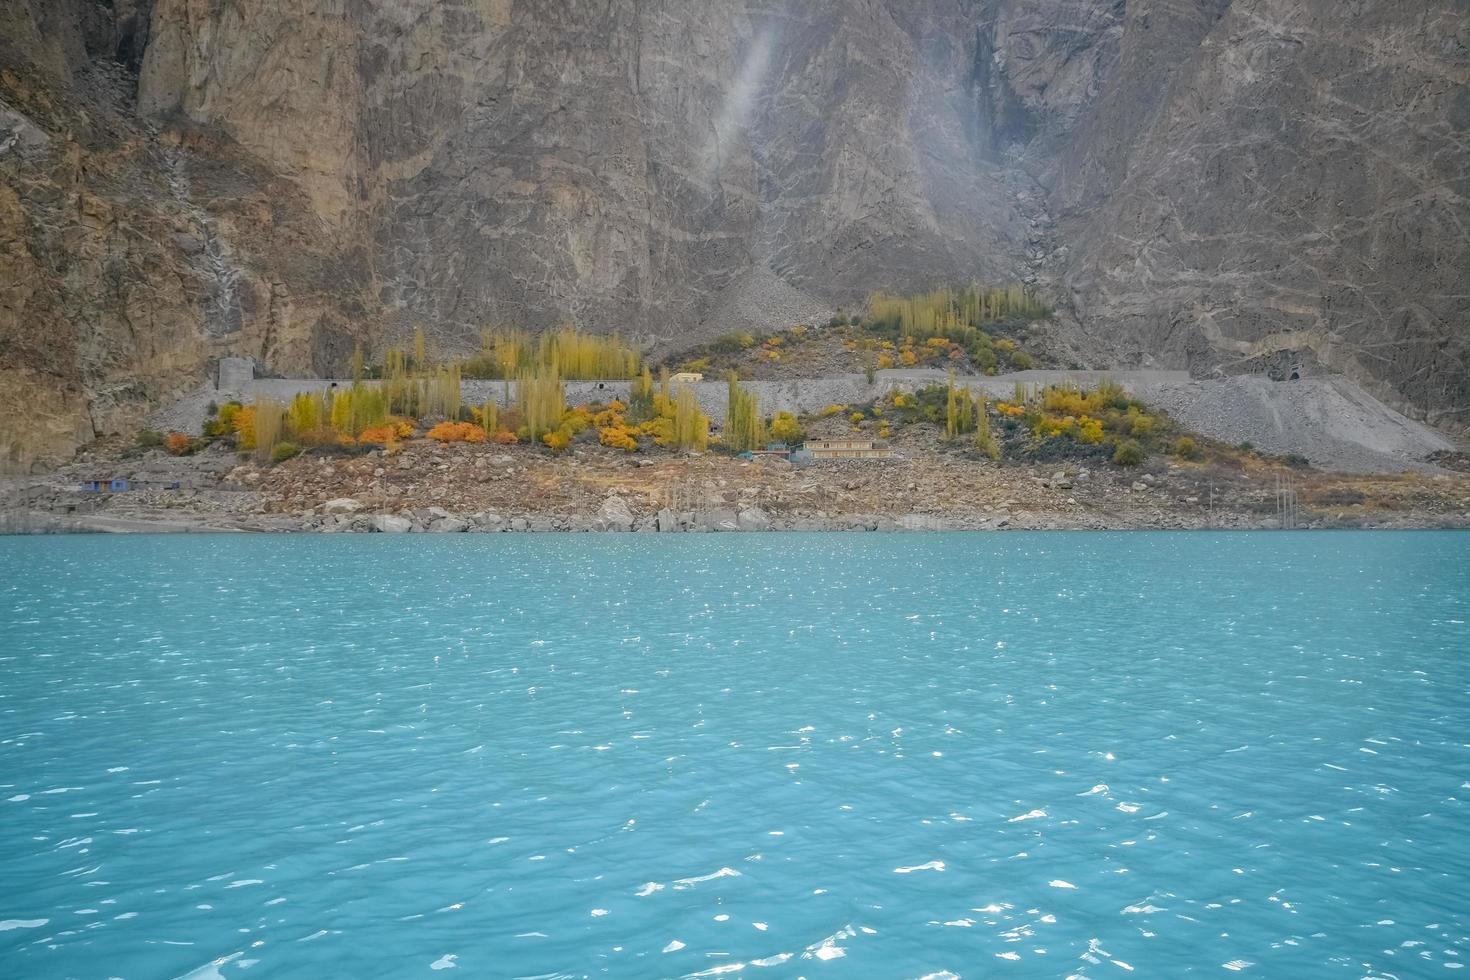 turkosvatten i attabadsjön foto